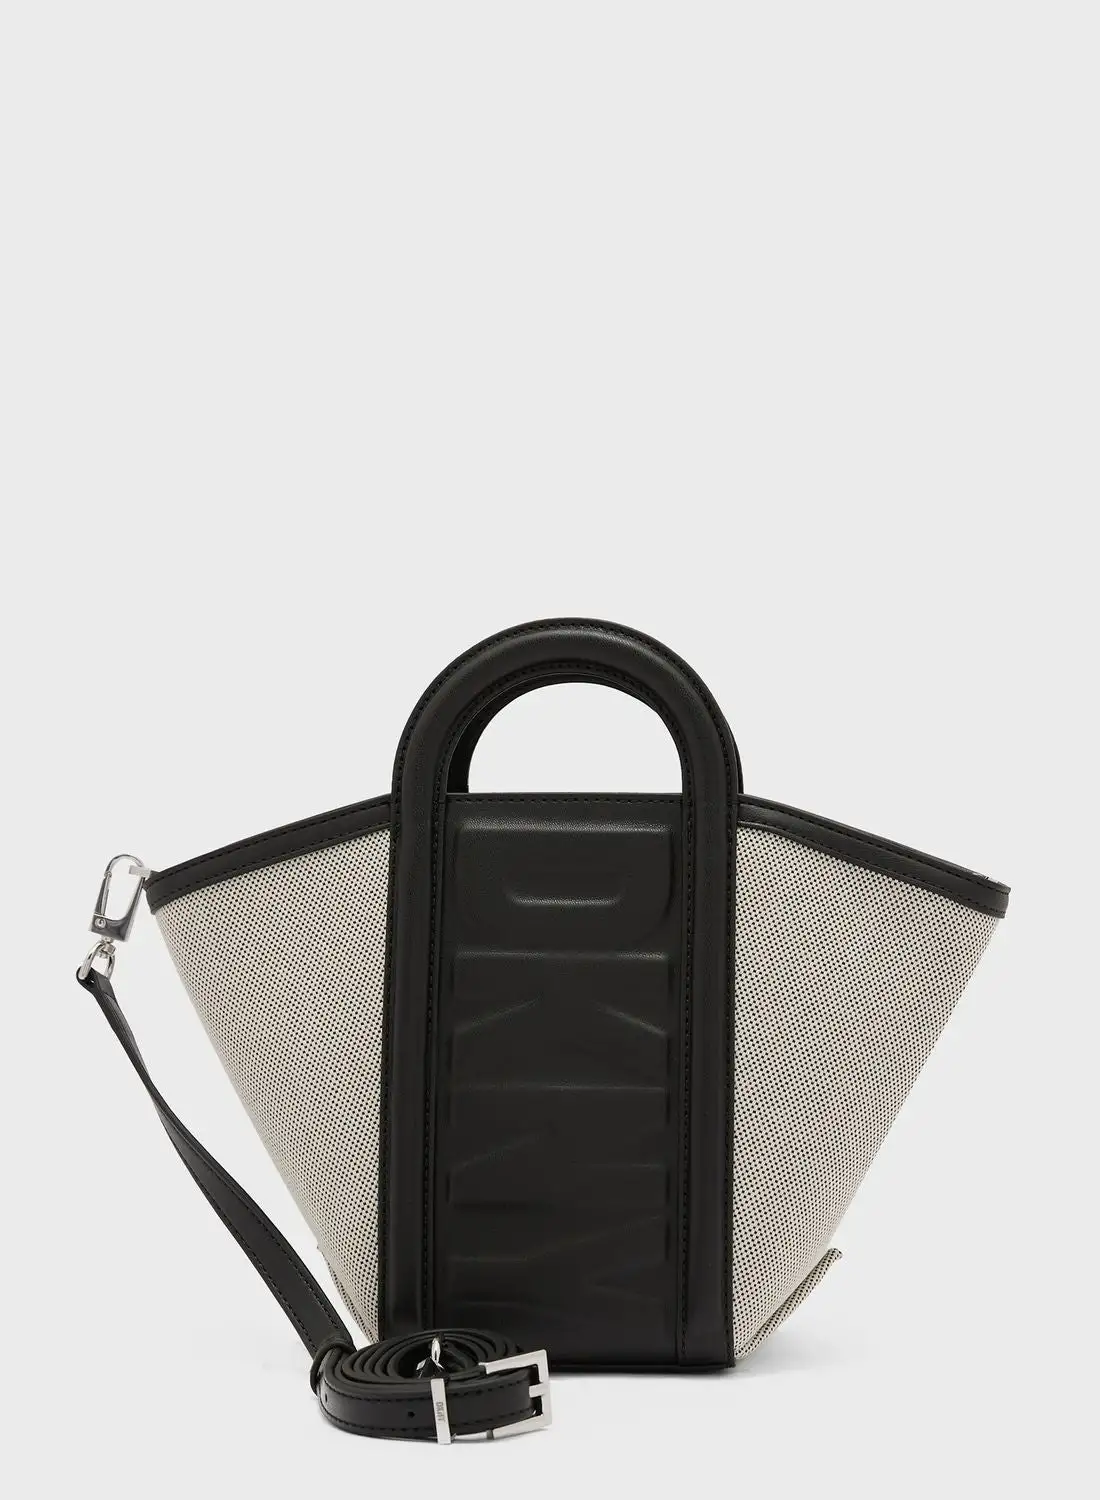 DKNY Talia Top Handle Crossbody Bags